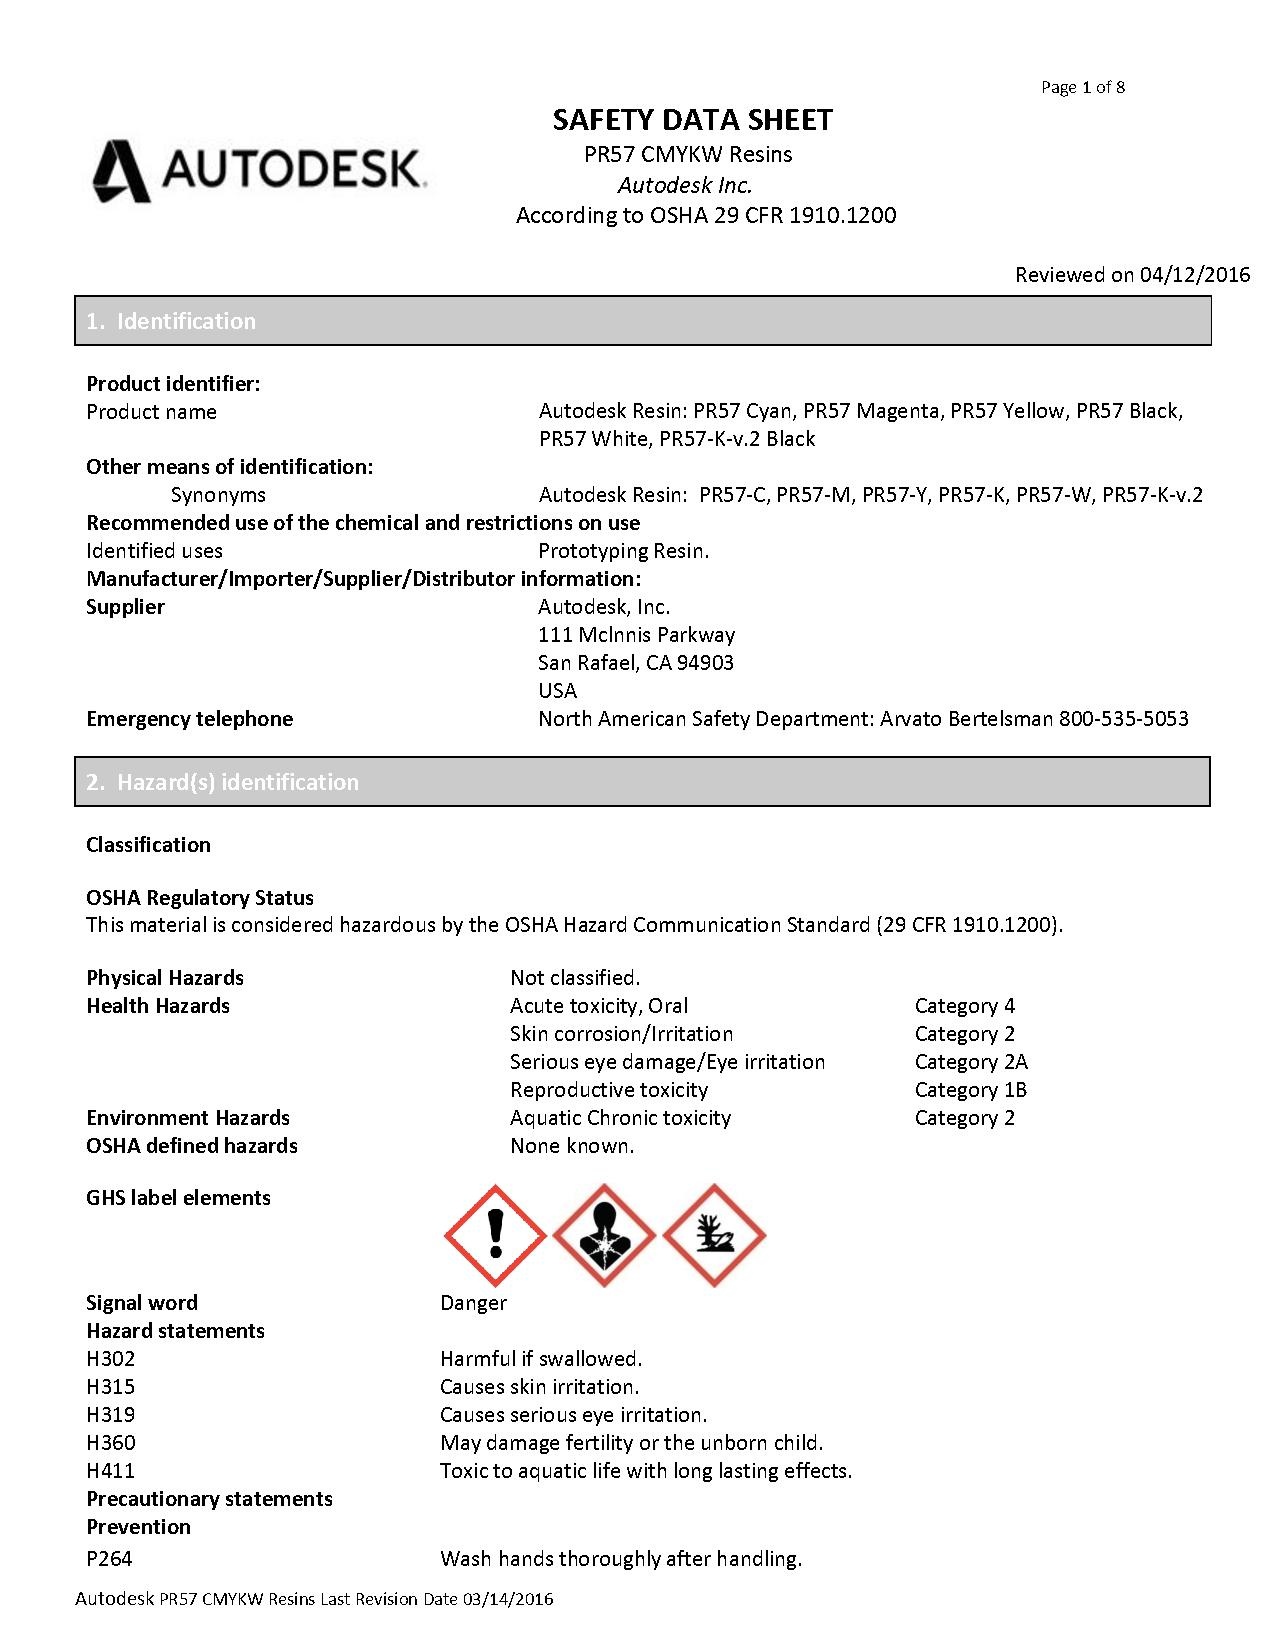 Osha Material Safety Data Sheets Pdf Iweky